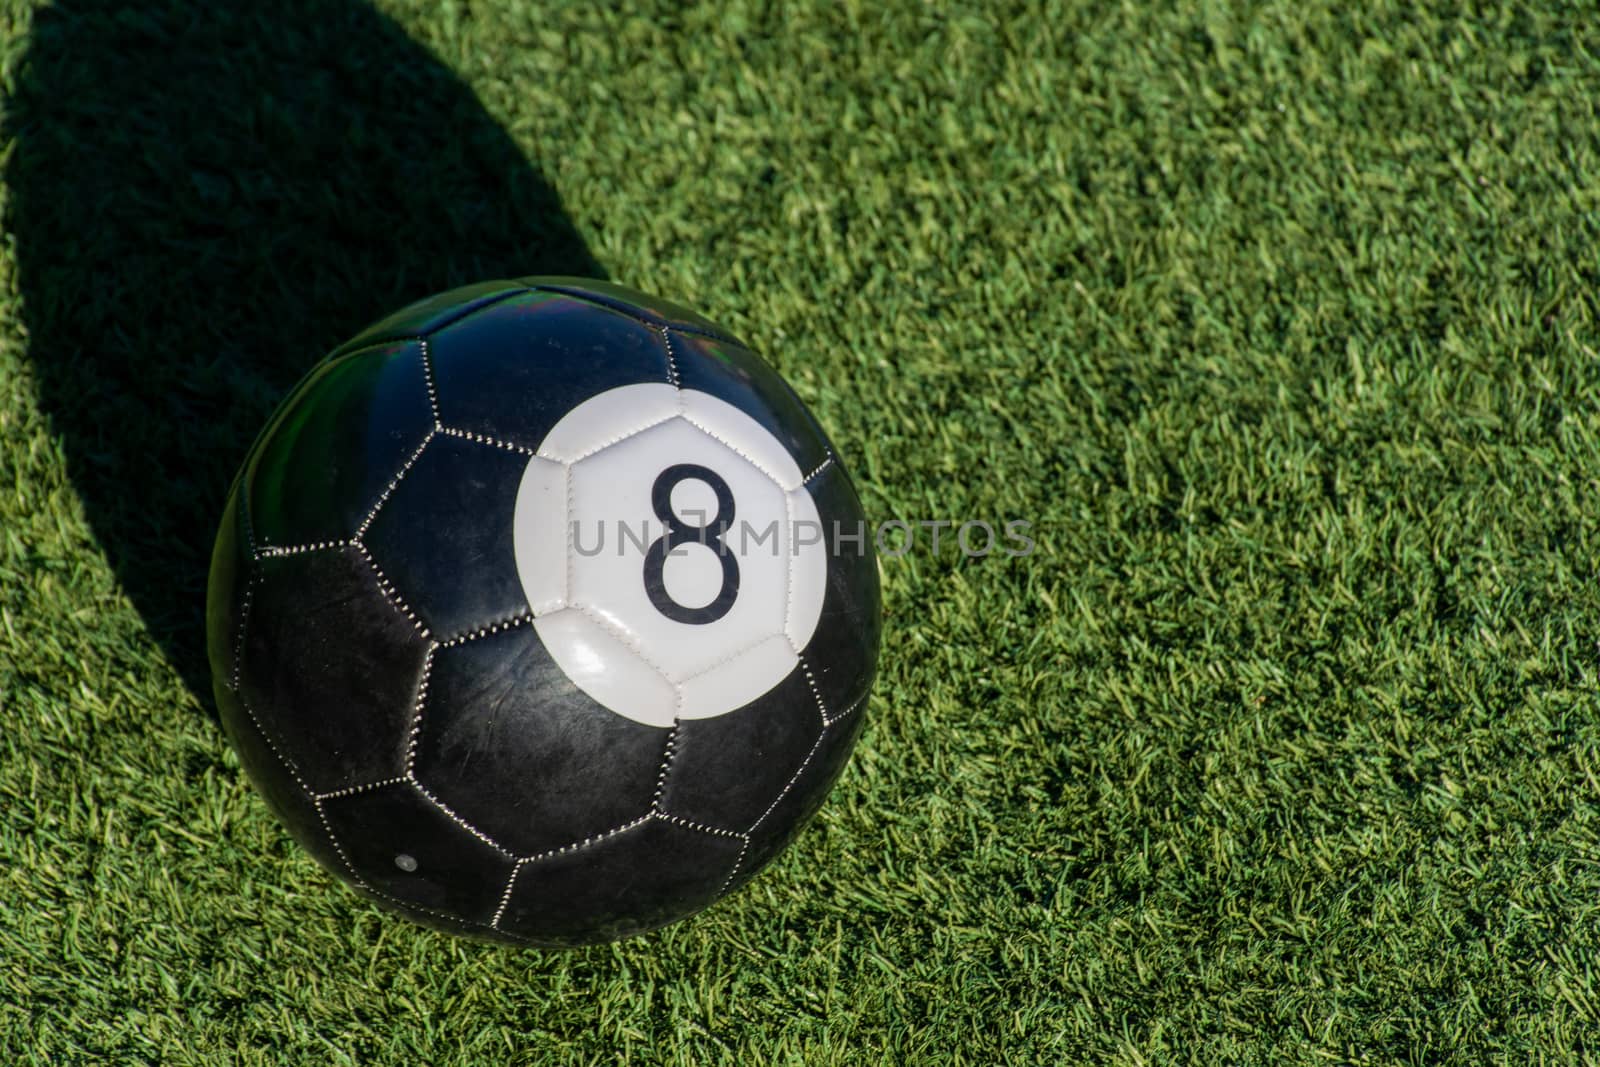 Black Eight (8) ball a soccer billiards or pool ball on green gr by kingmaphotos